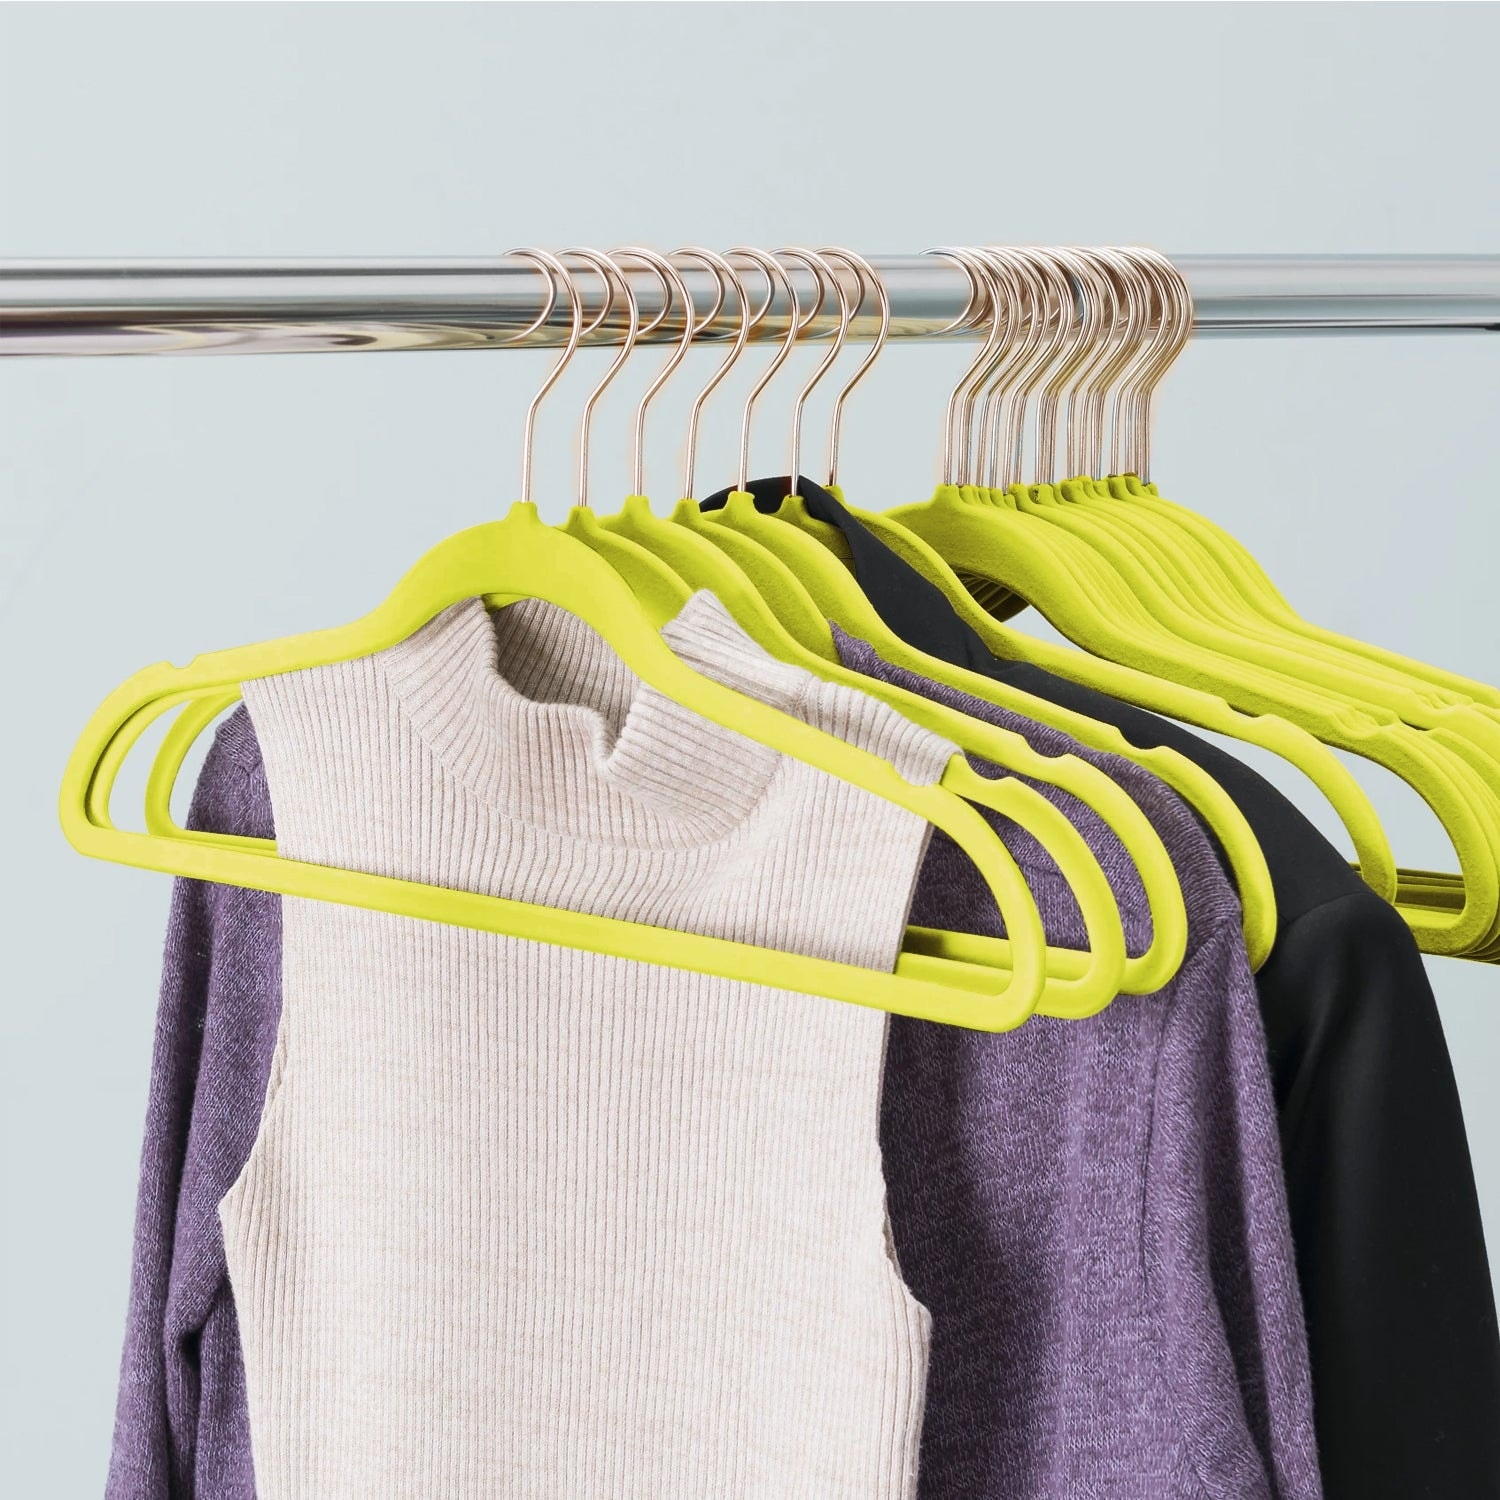 HMLifestyle-Heavy Duty Extra Wide Plastic Clothes Hangers Velvet